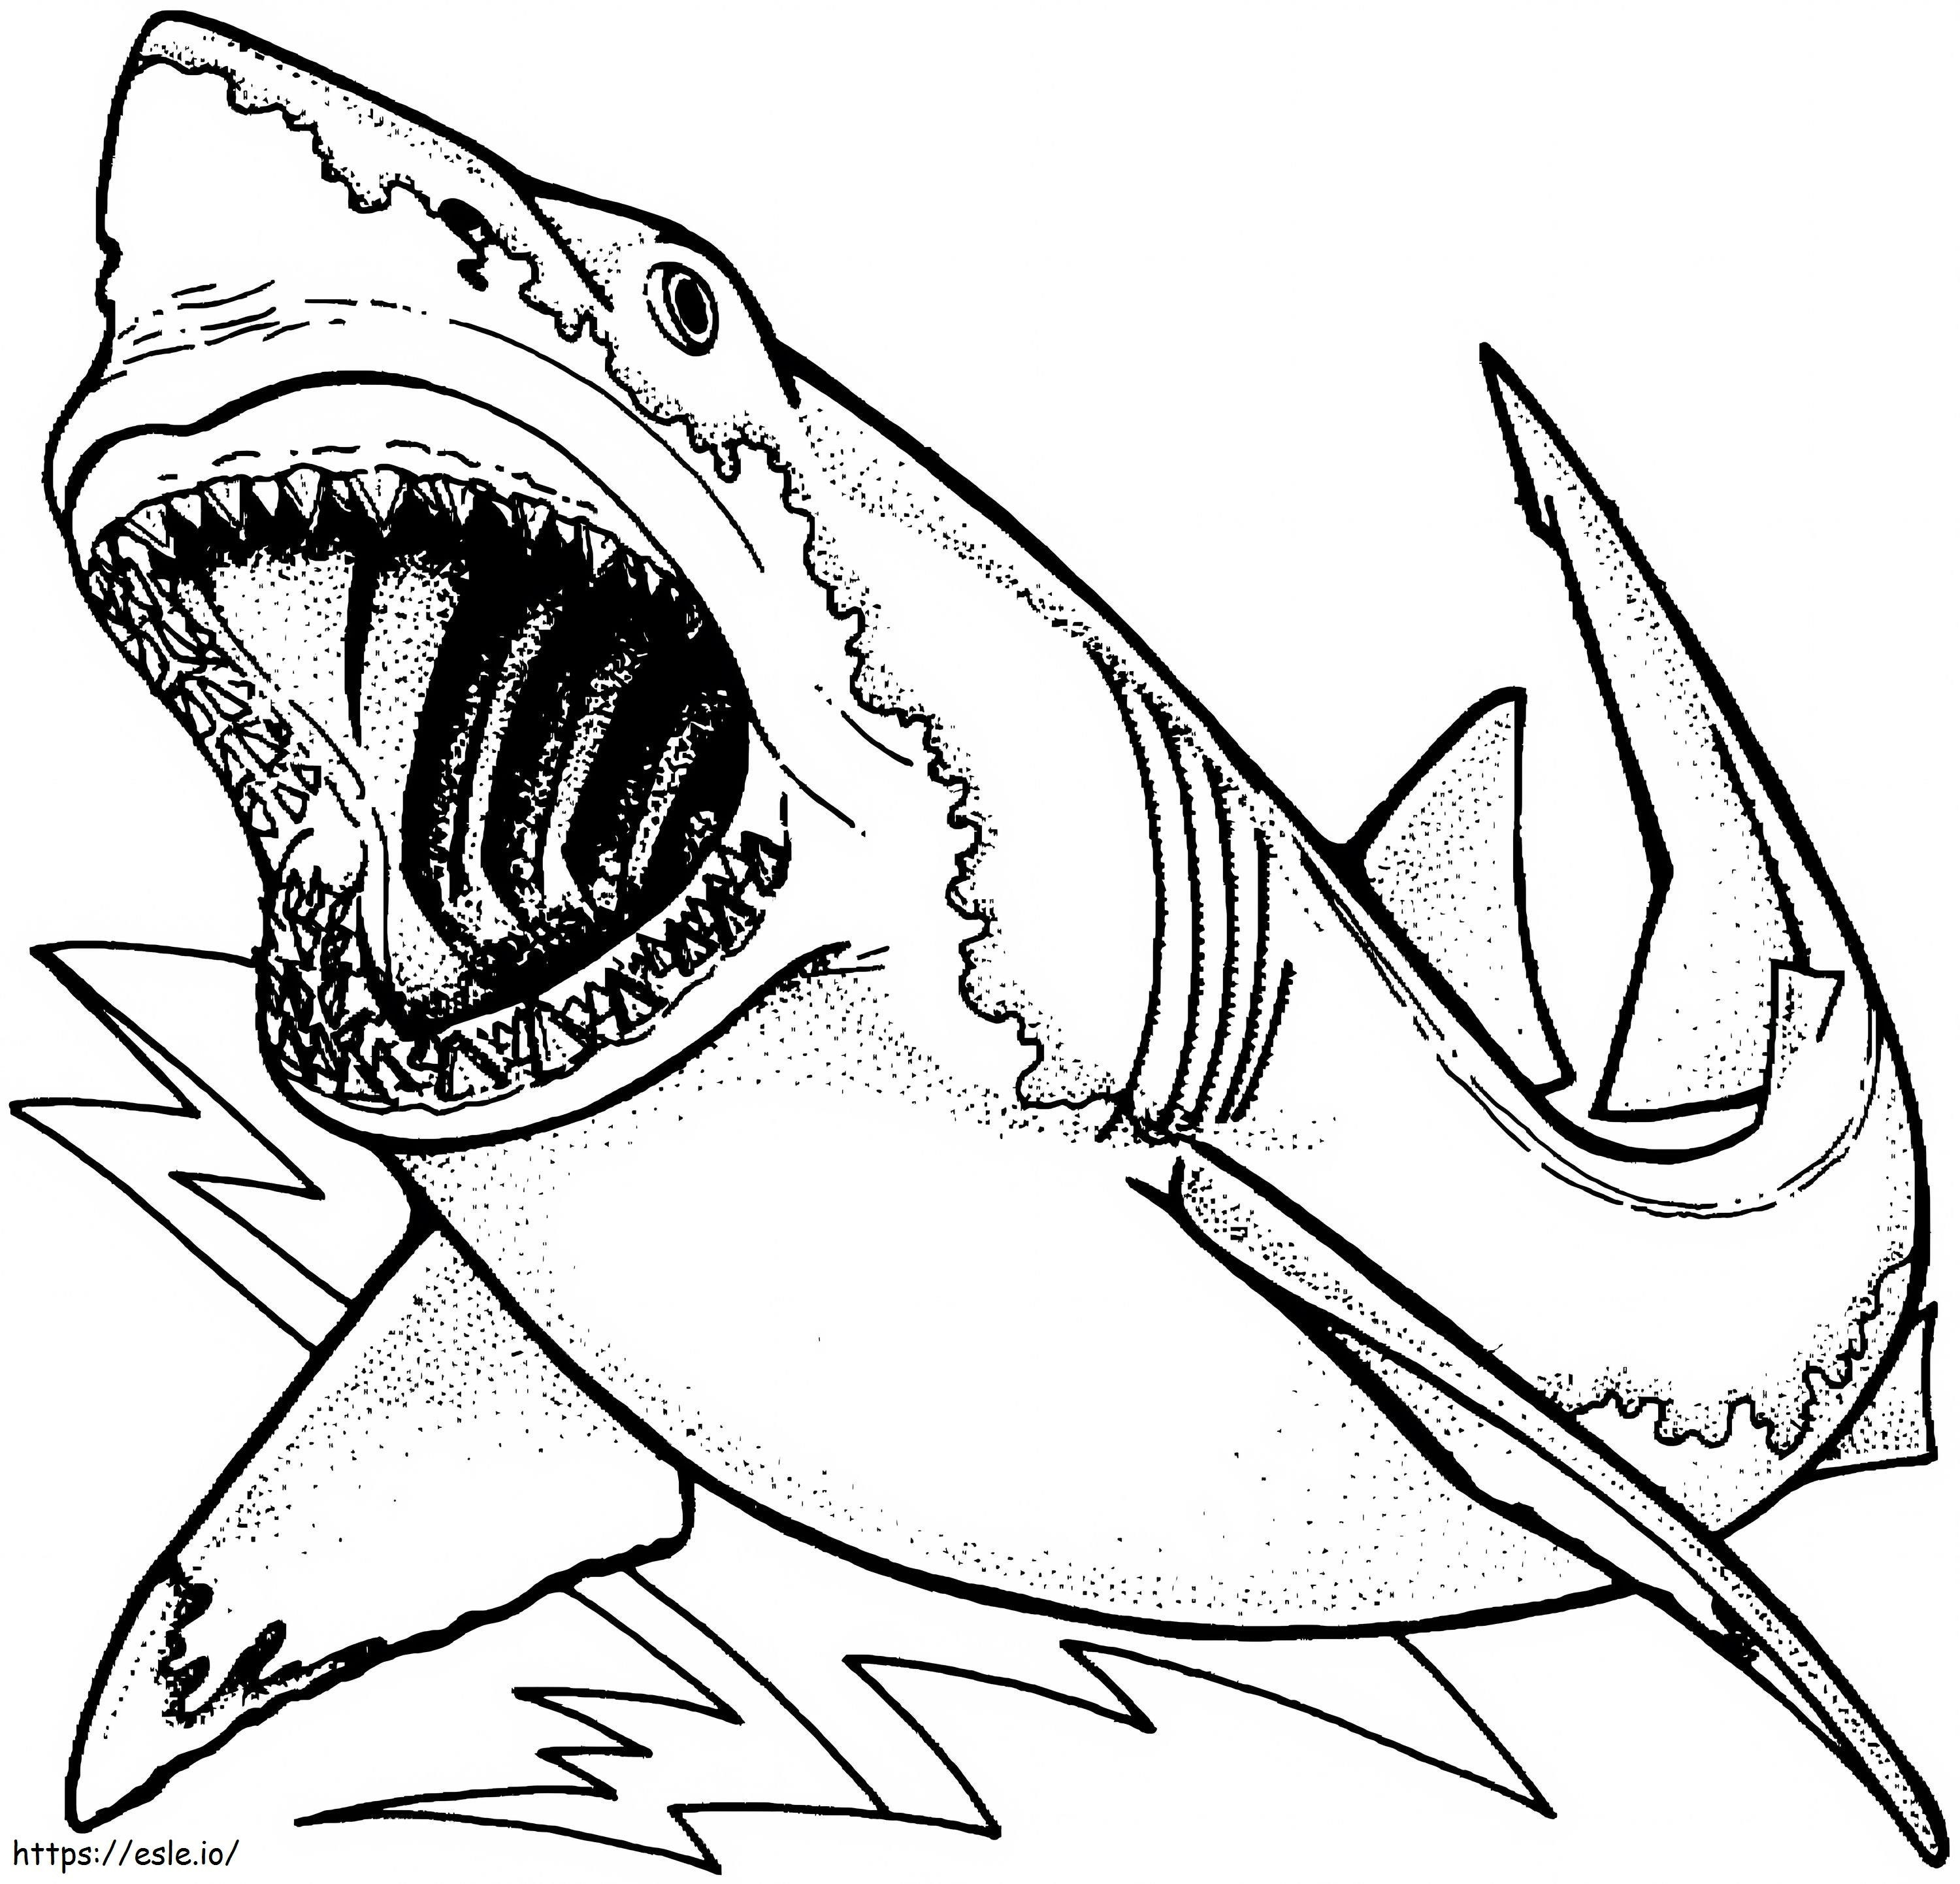 Basic Tiburon coloring page